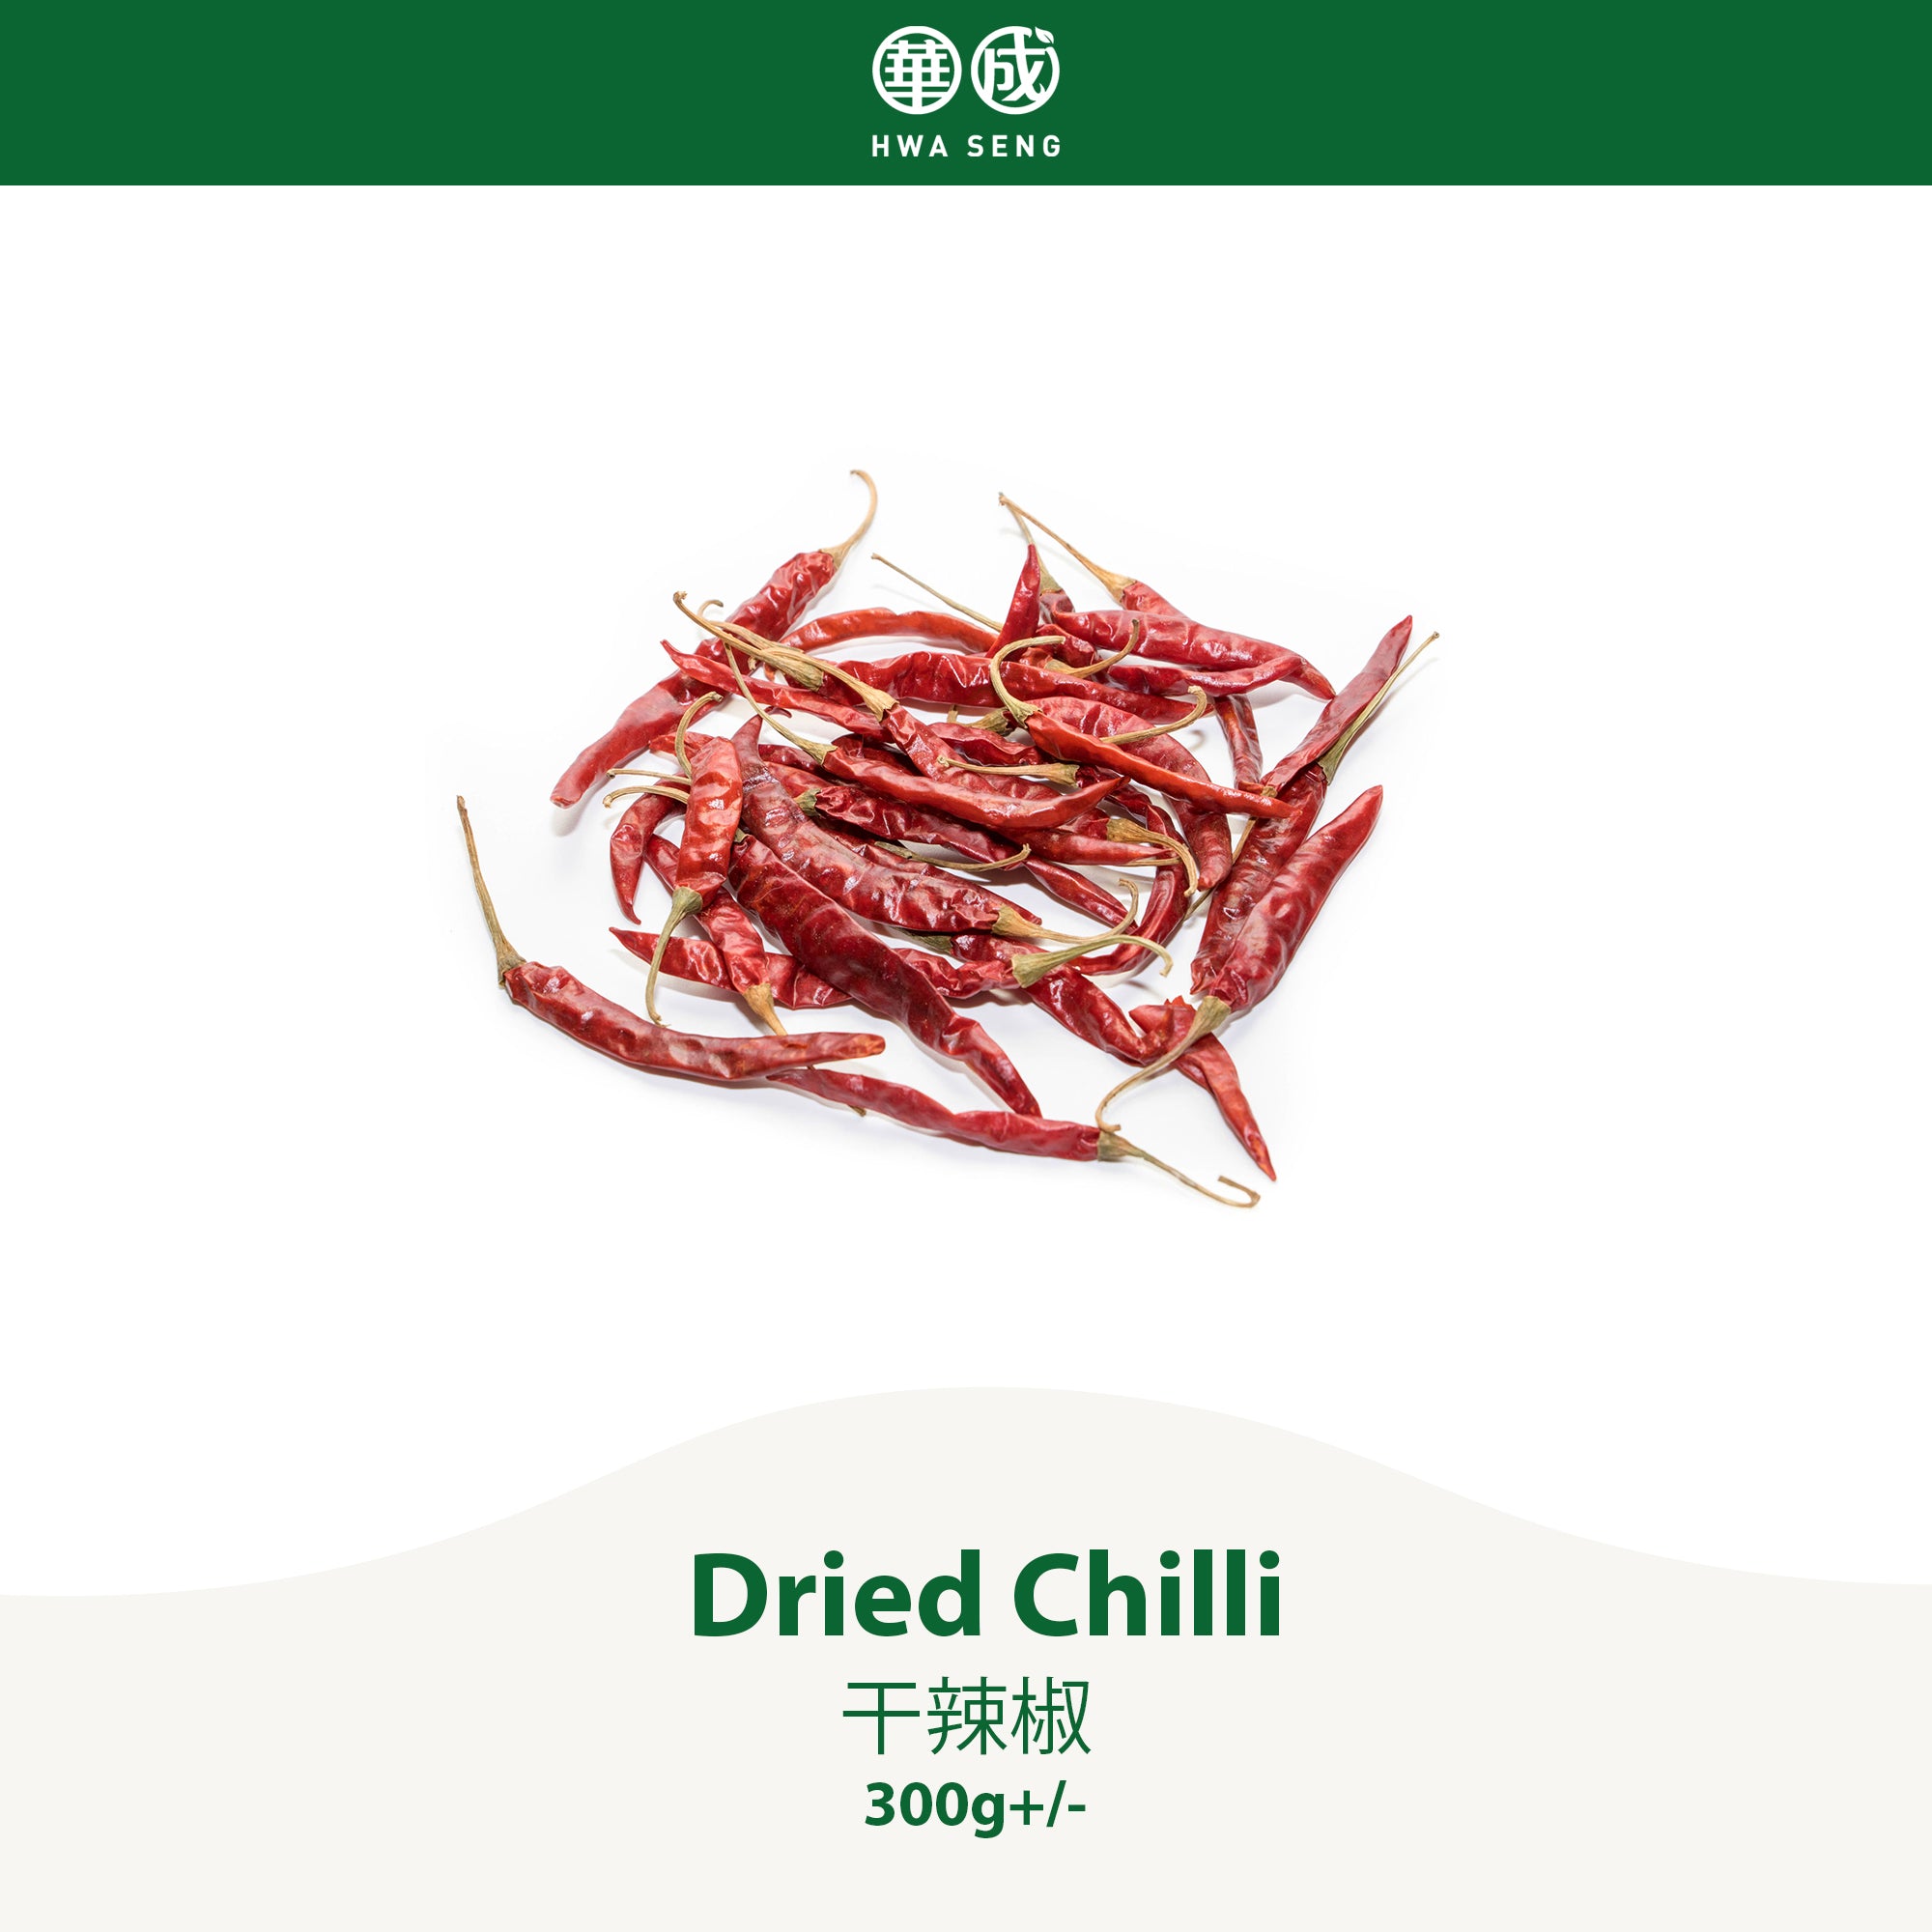 Dried Chilli 干辣椒 300g+/-